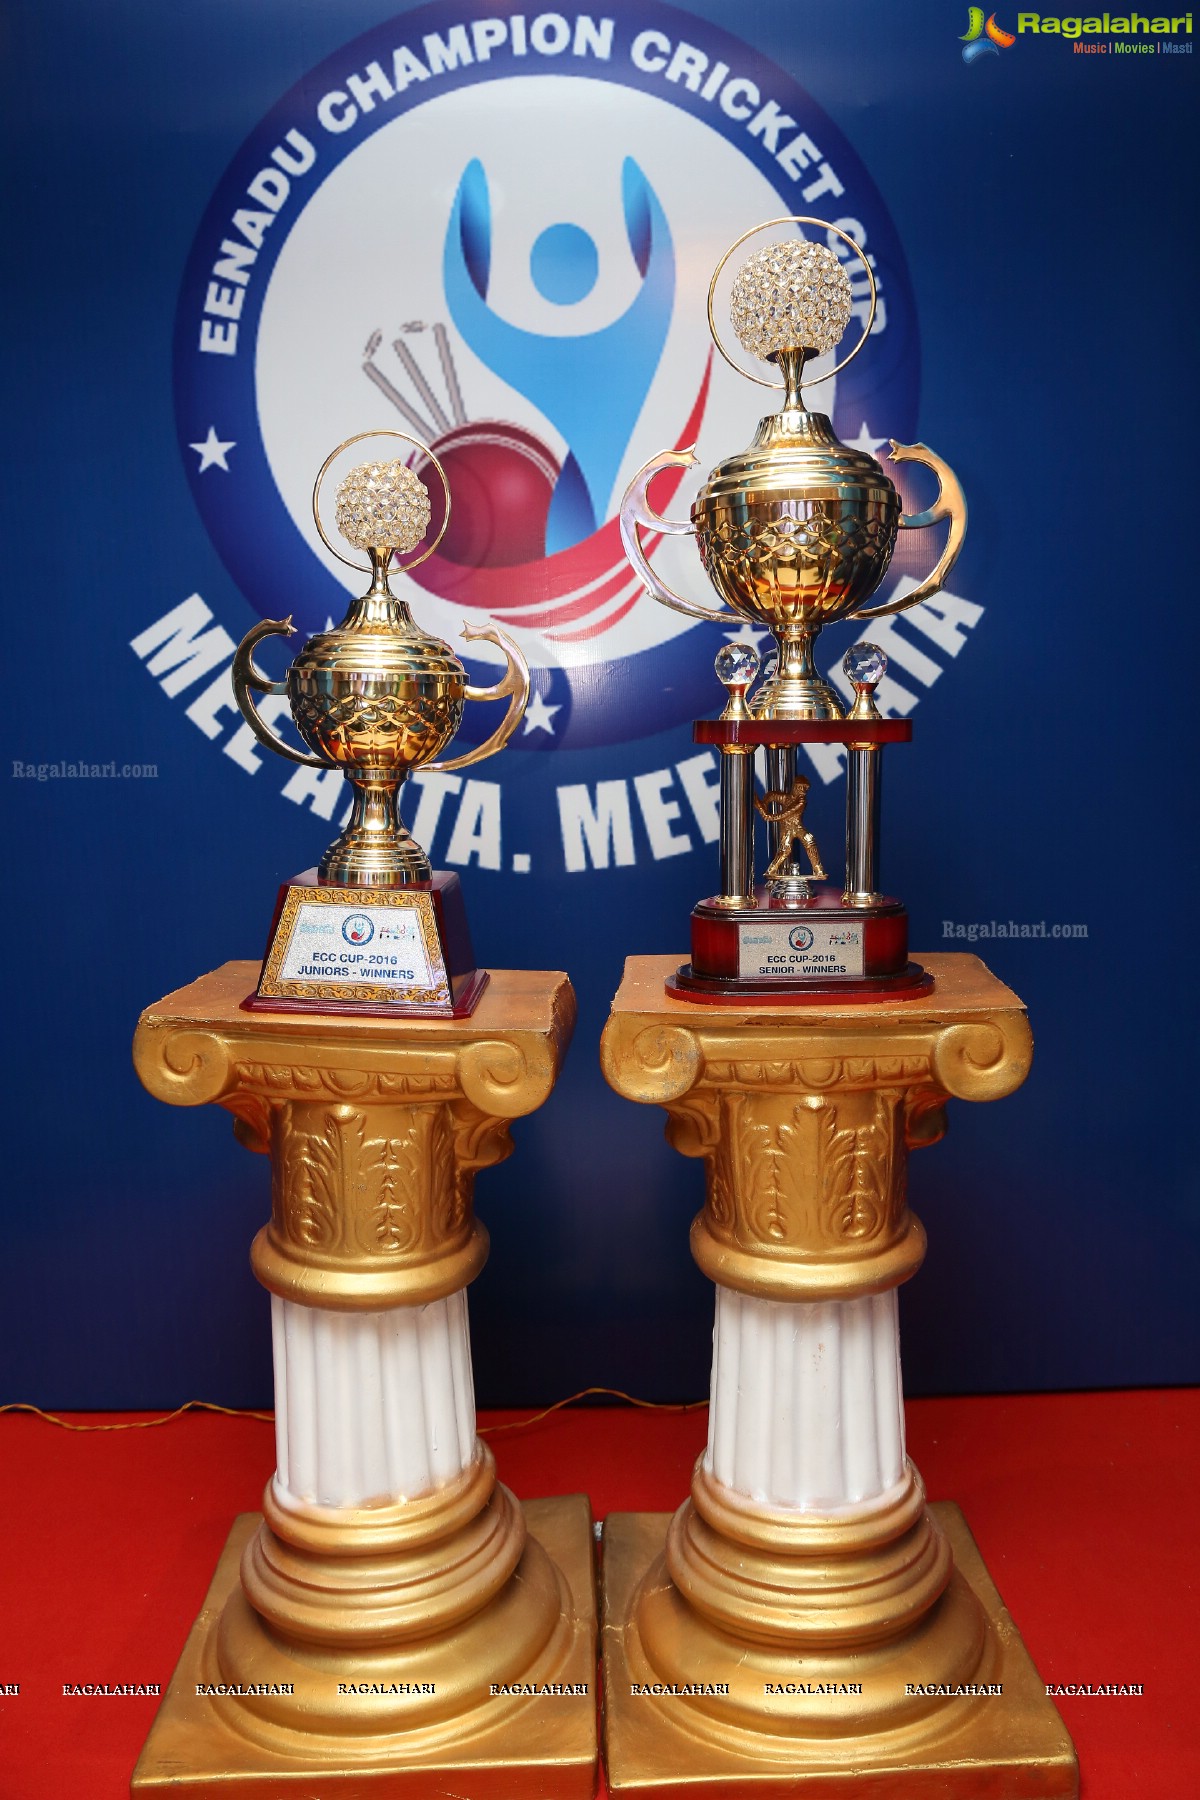 Eenadu Champion Cricket Cup 2016 Launch